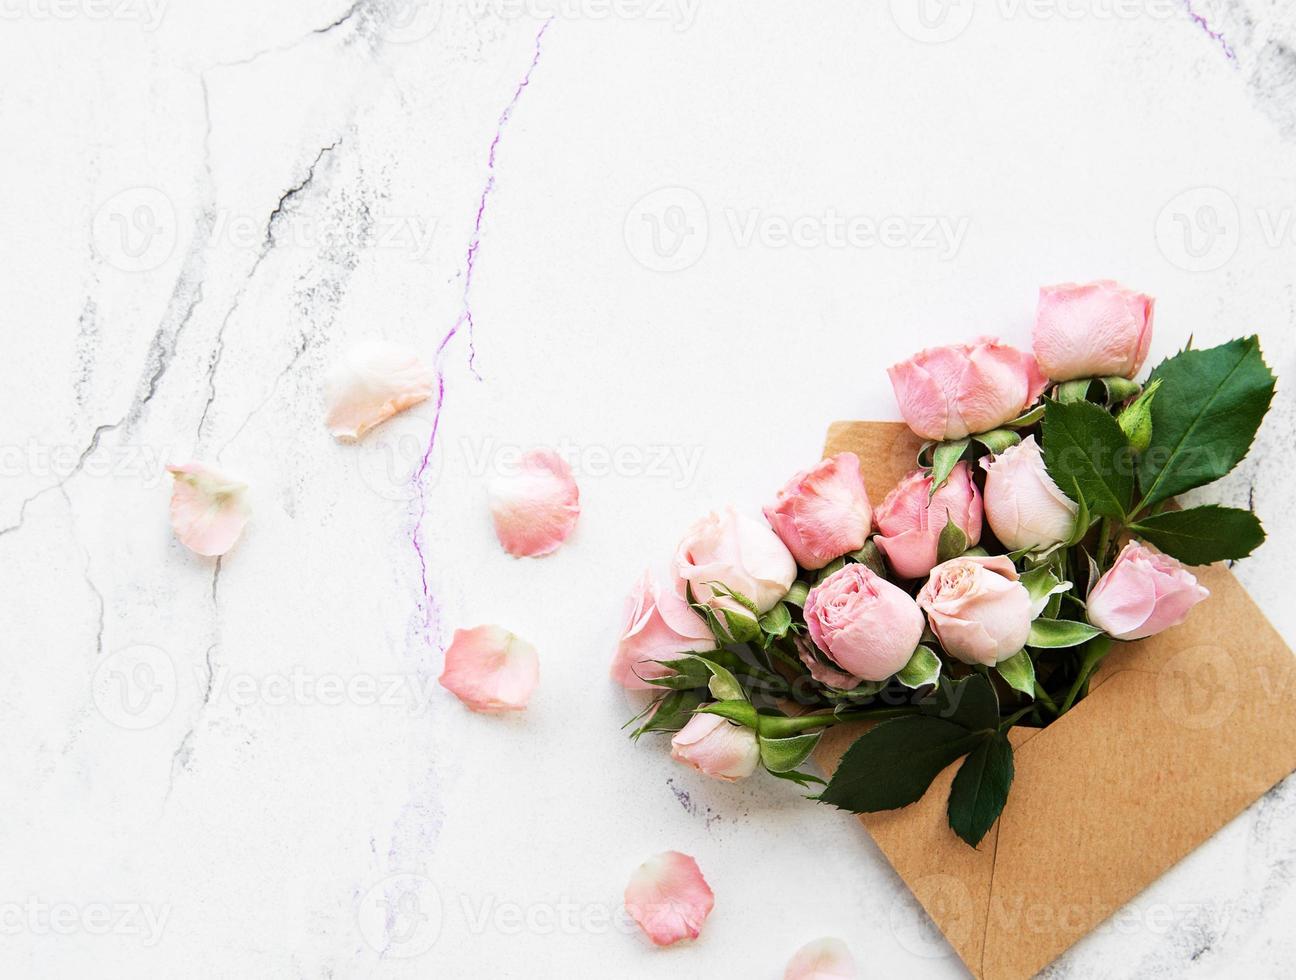 enveloppe et roses roses photo